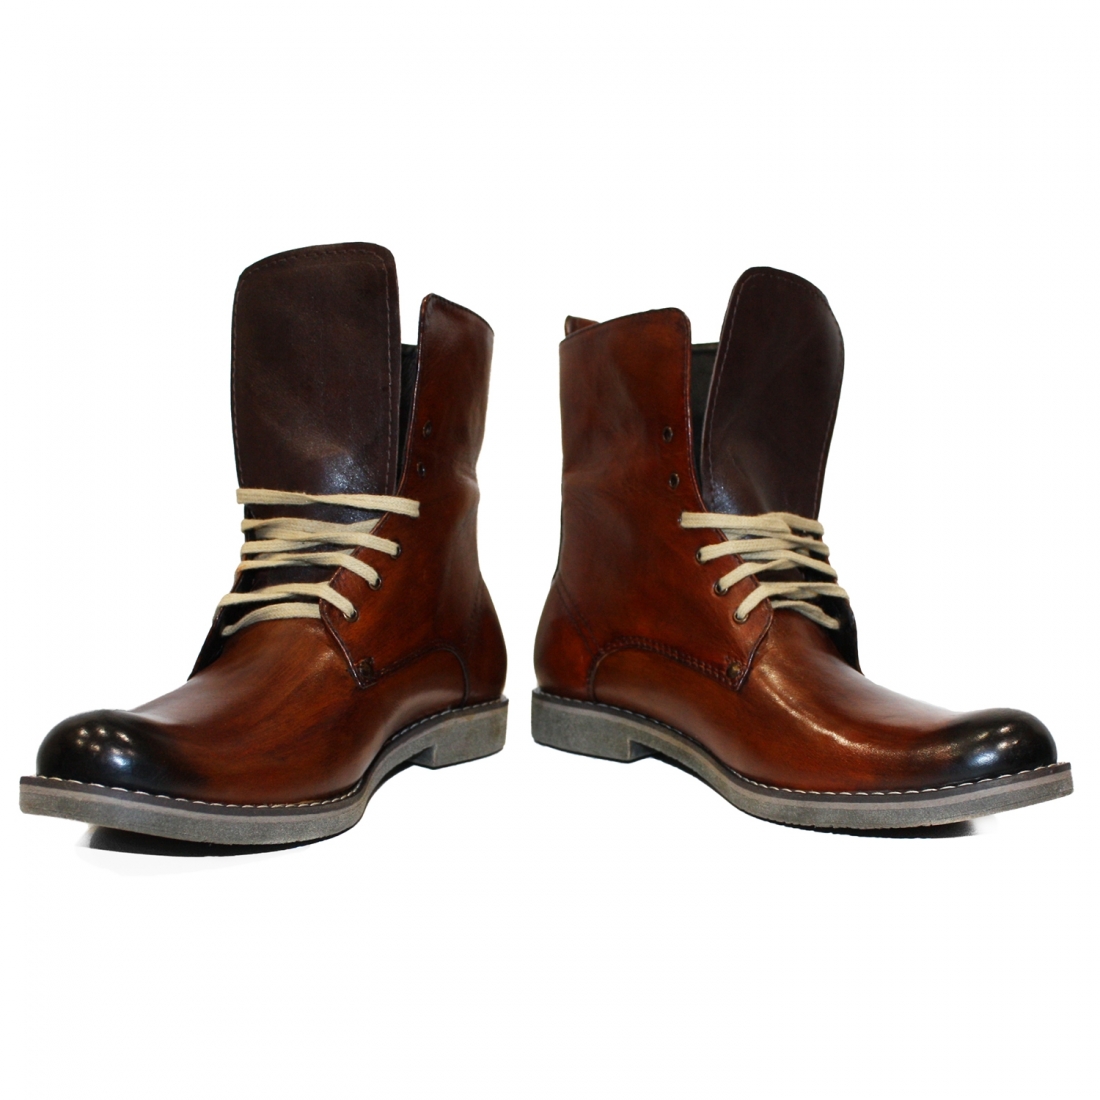 Modello Homare - Bottes Hautes - Handmade Colorful Italian Leather Shoes